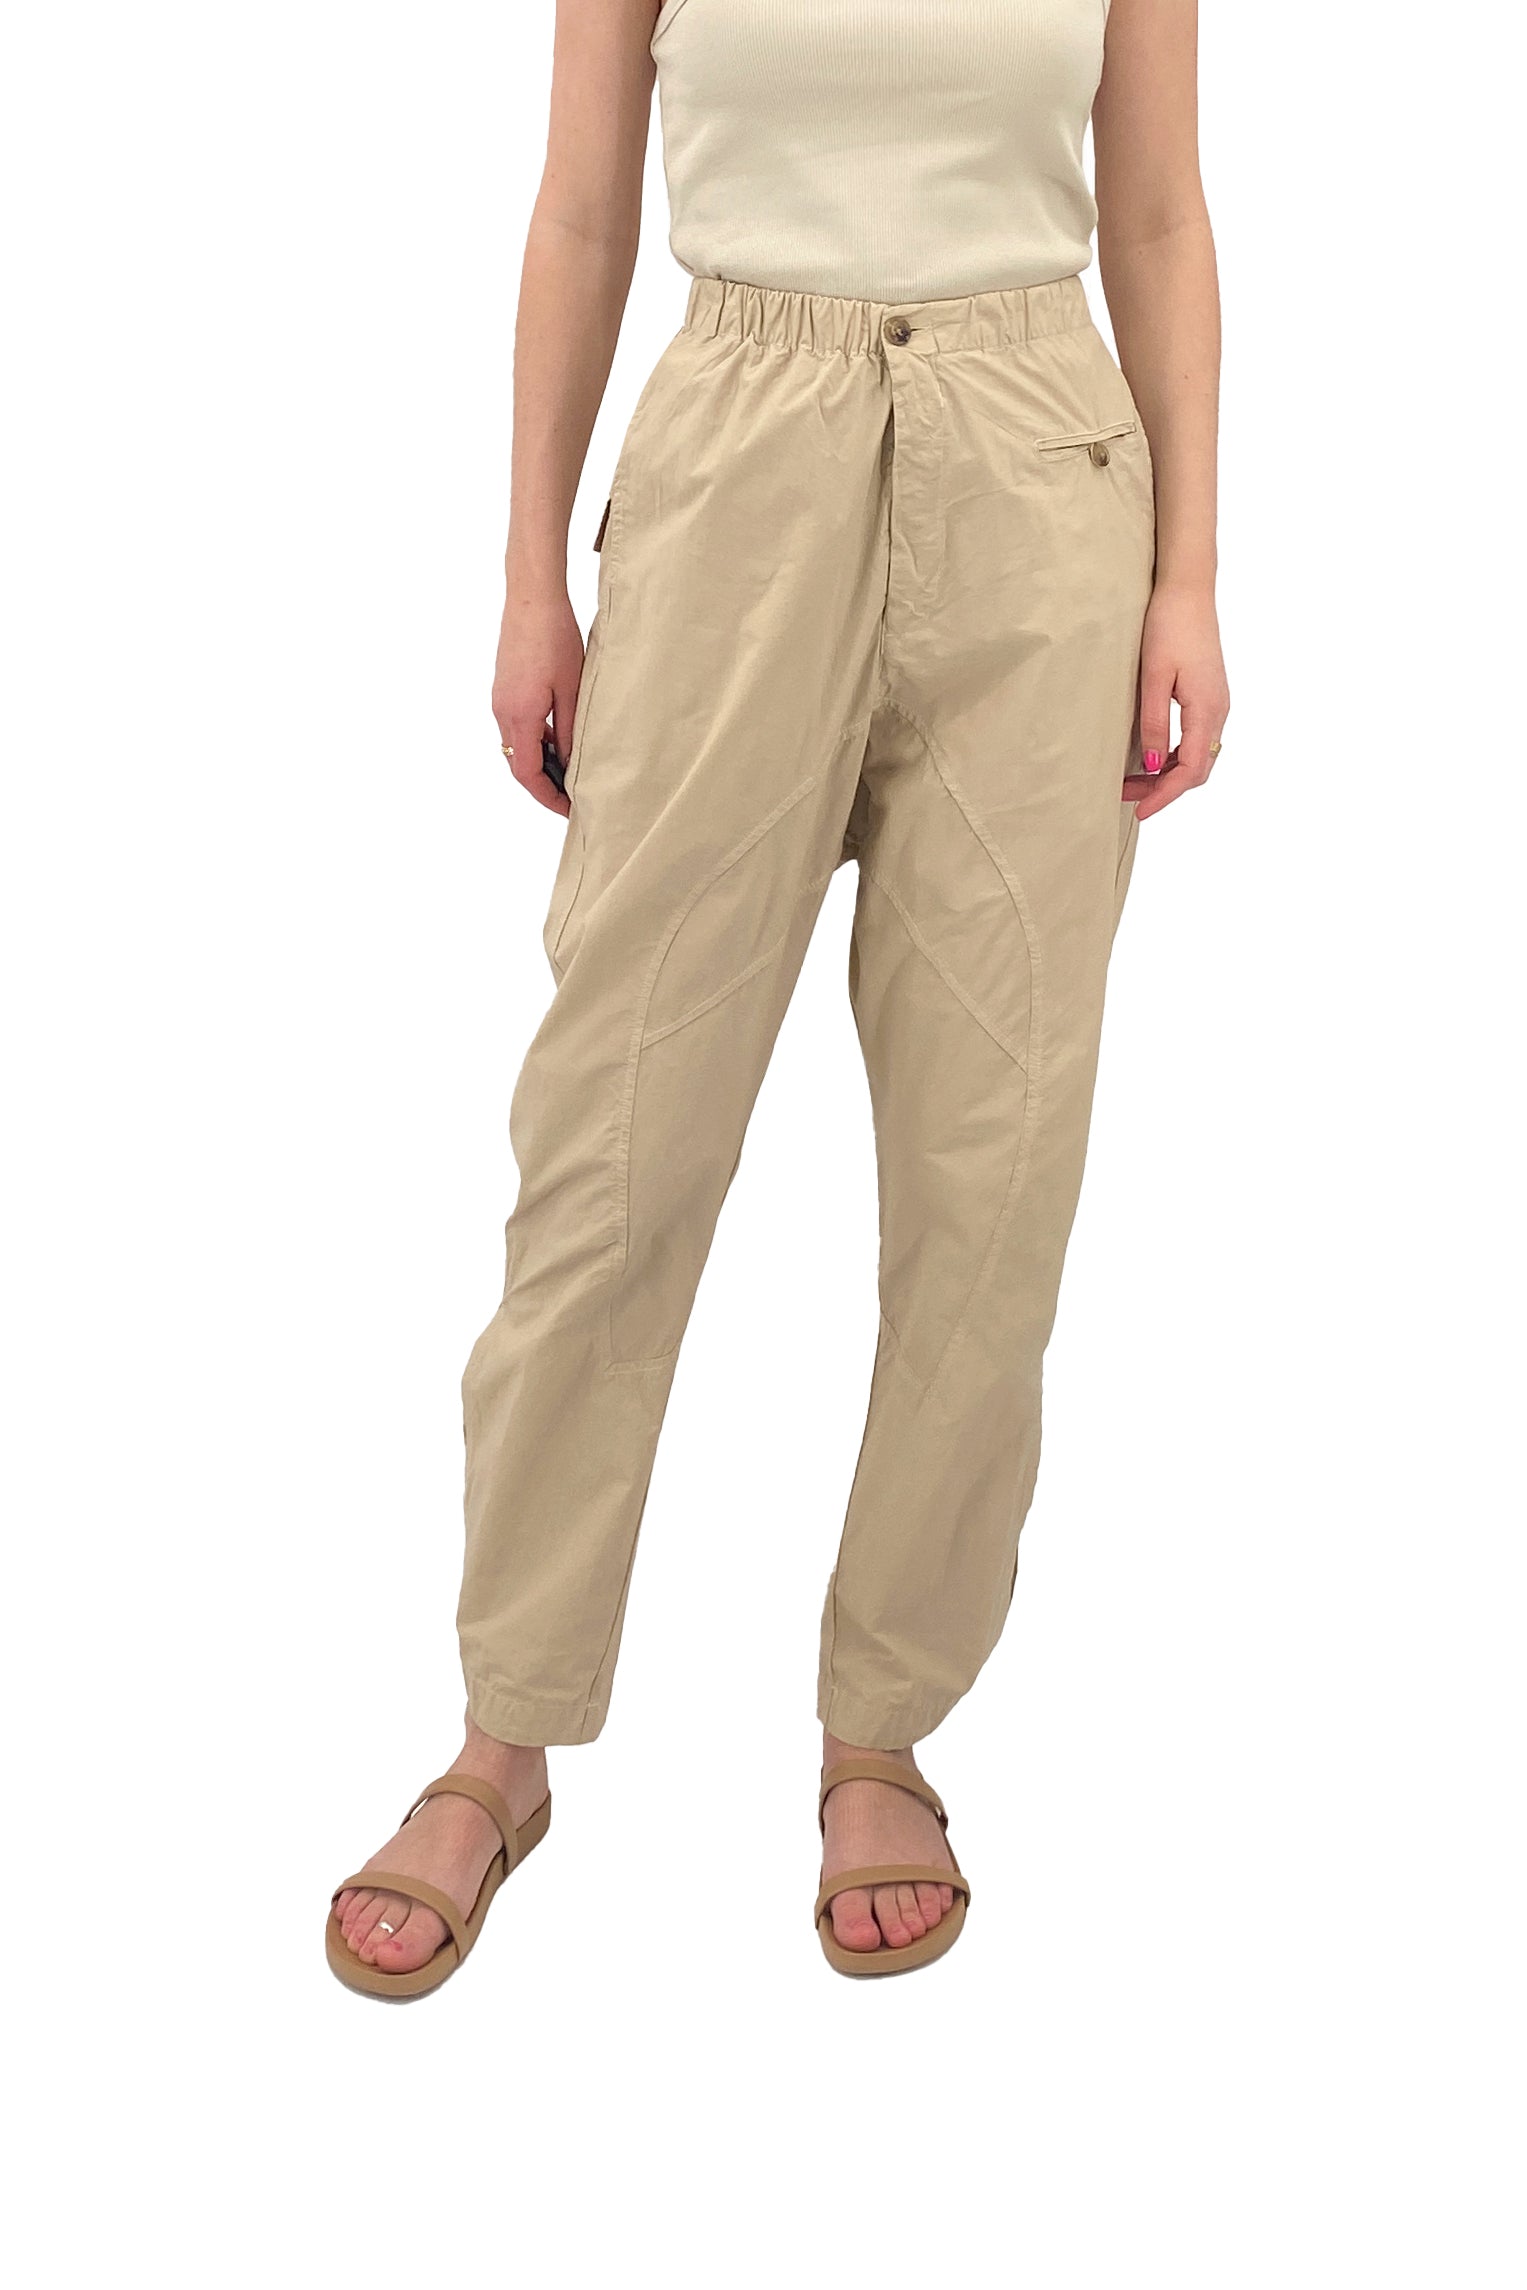 YUTU&MM self-made Made Cotton Thai Fisherman pants loosefitting men & women  - Khadi pants - Boho Hippie Style Fisher Man Pants